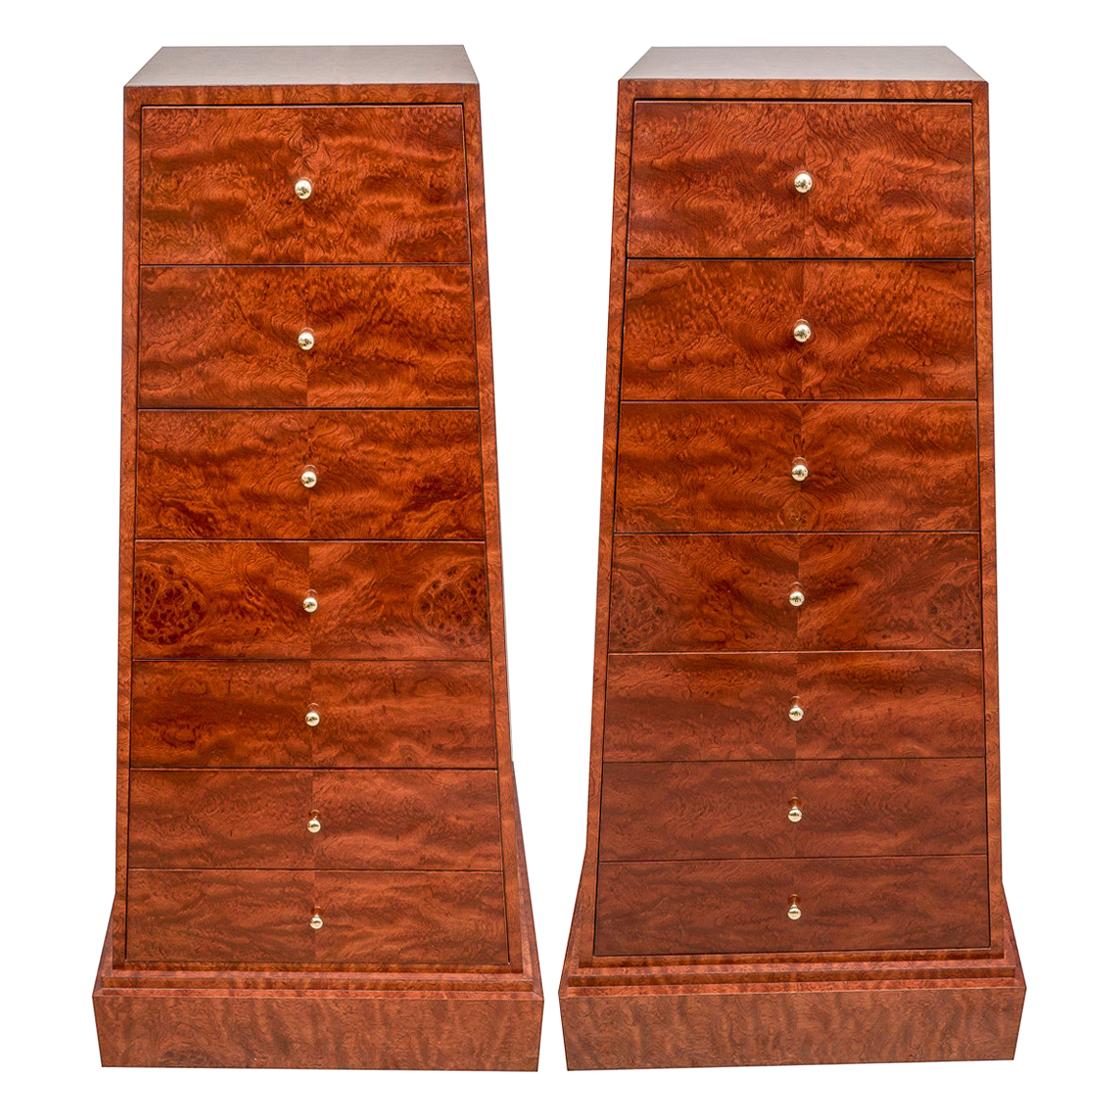 Pair of Obelisk Form Semainier Cabinets